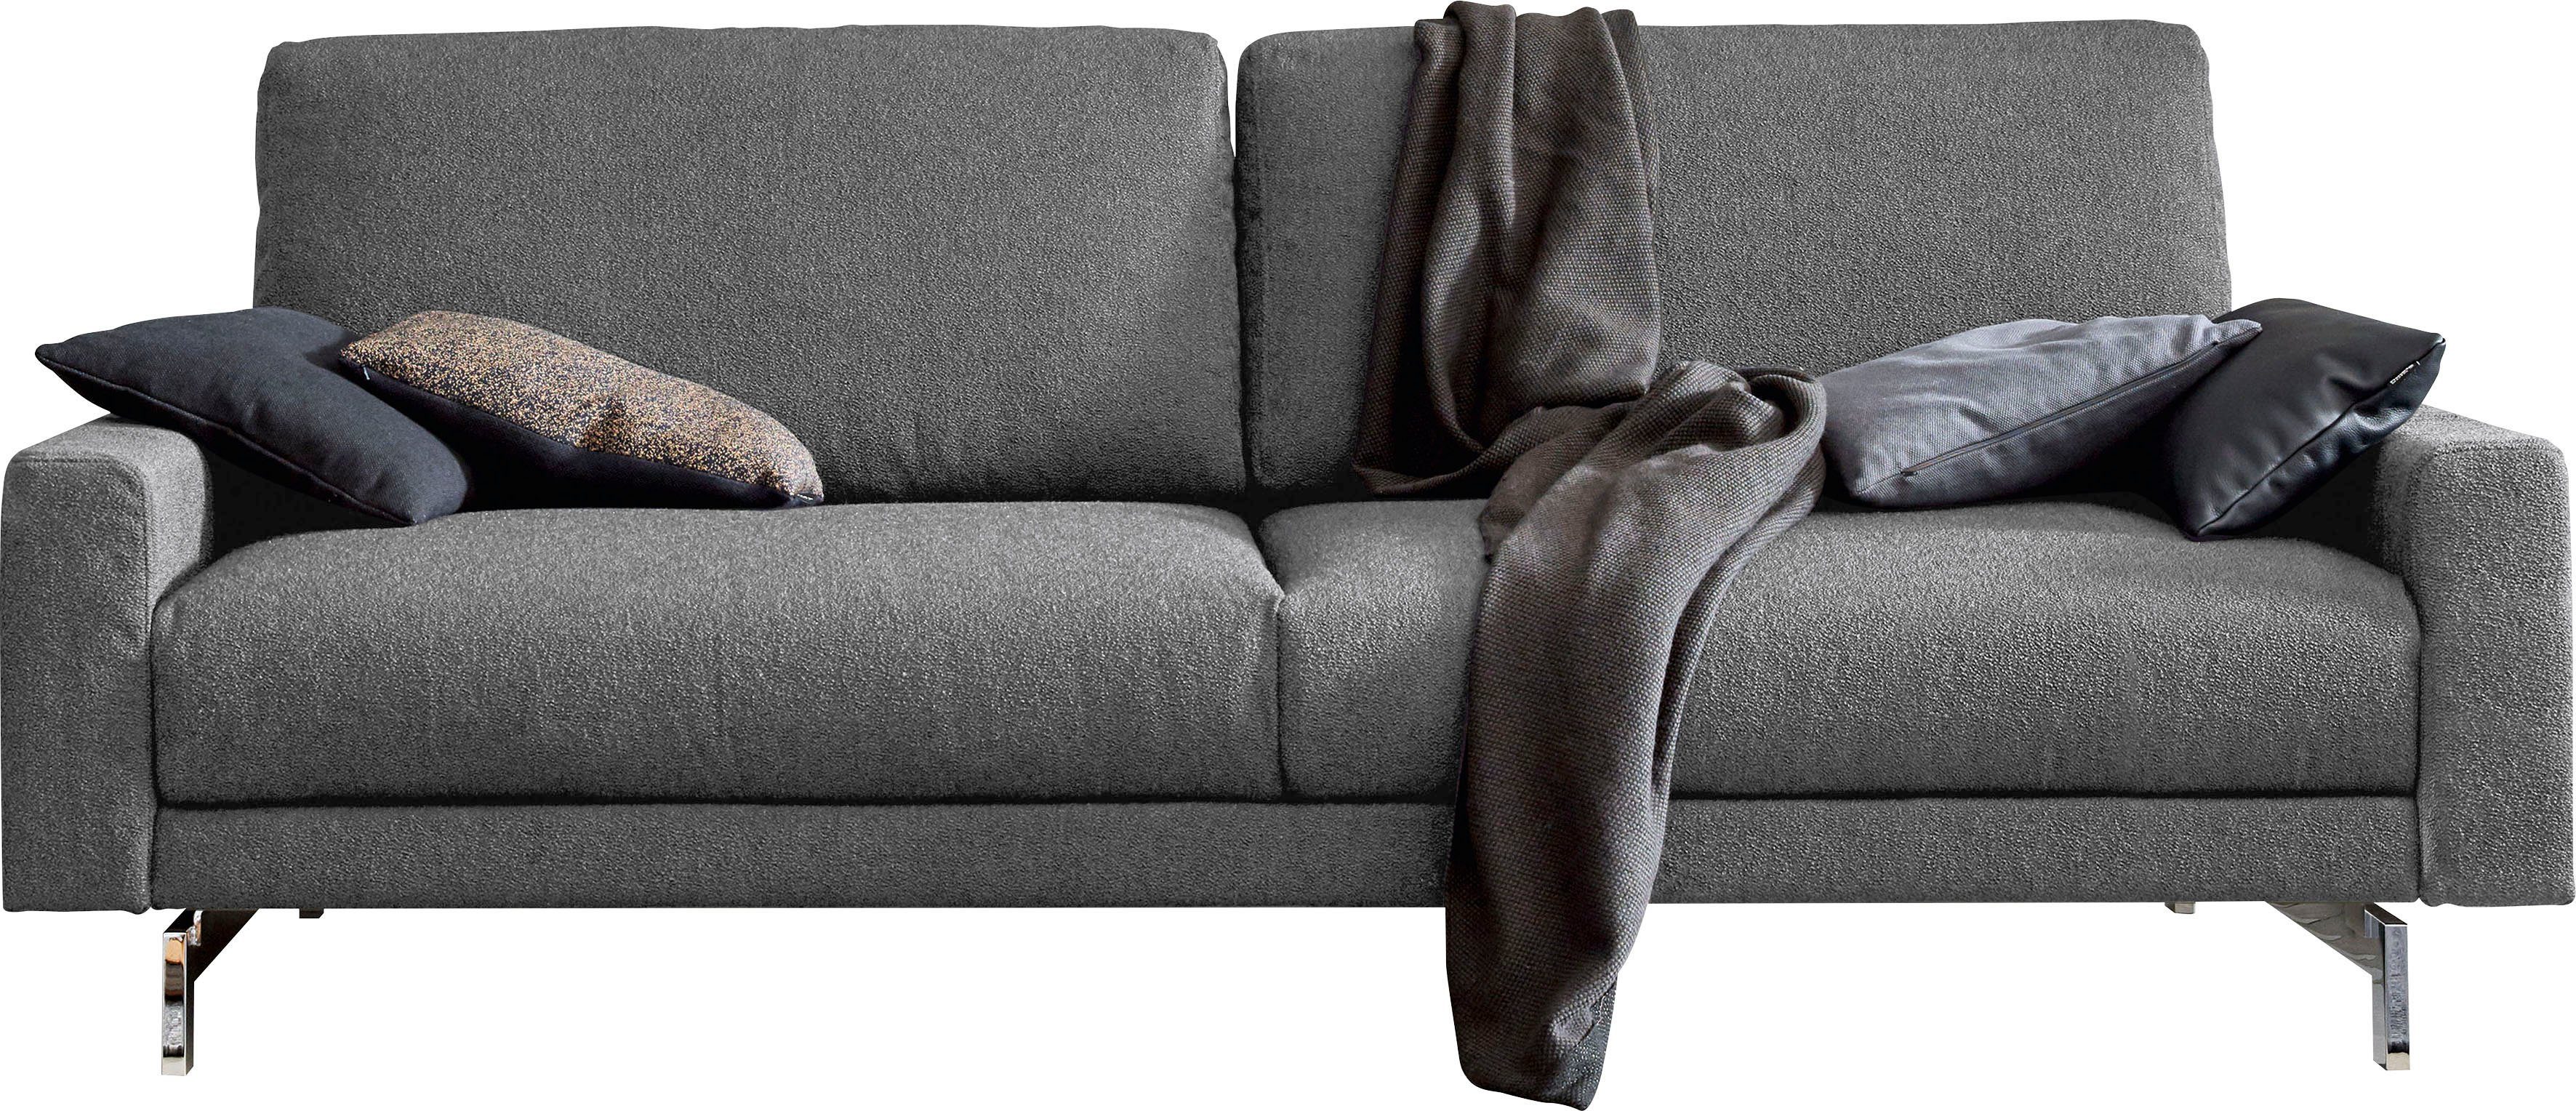 chromfarben Armlehne cm Fuß hülsta niedrig, sofa 2-Sitzer hs.450, glänzend, Breite 164